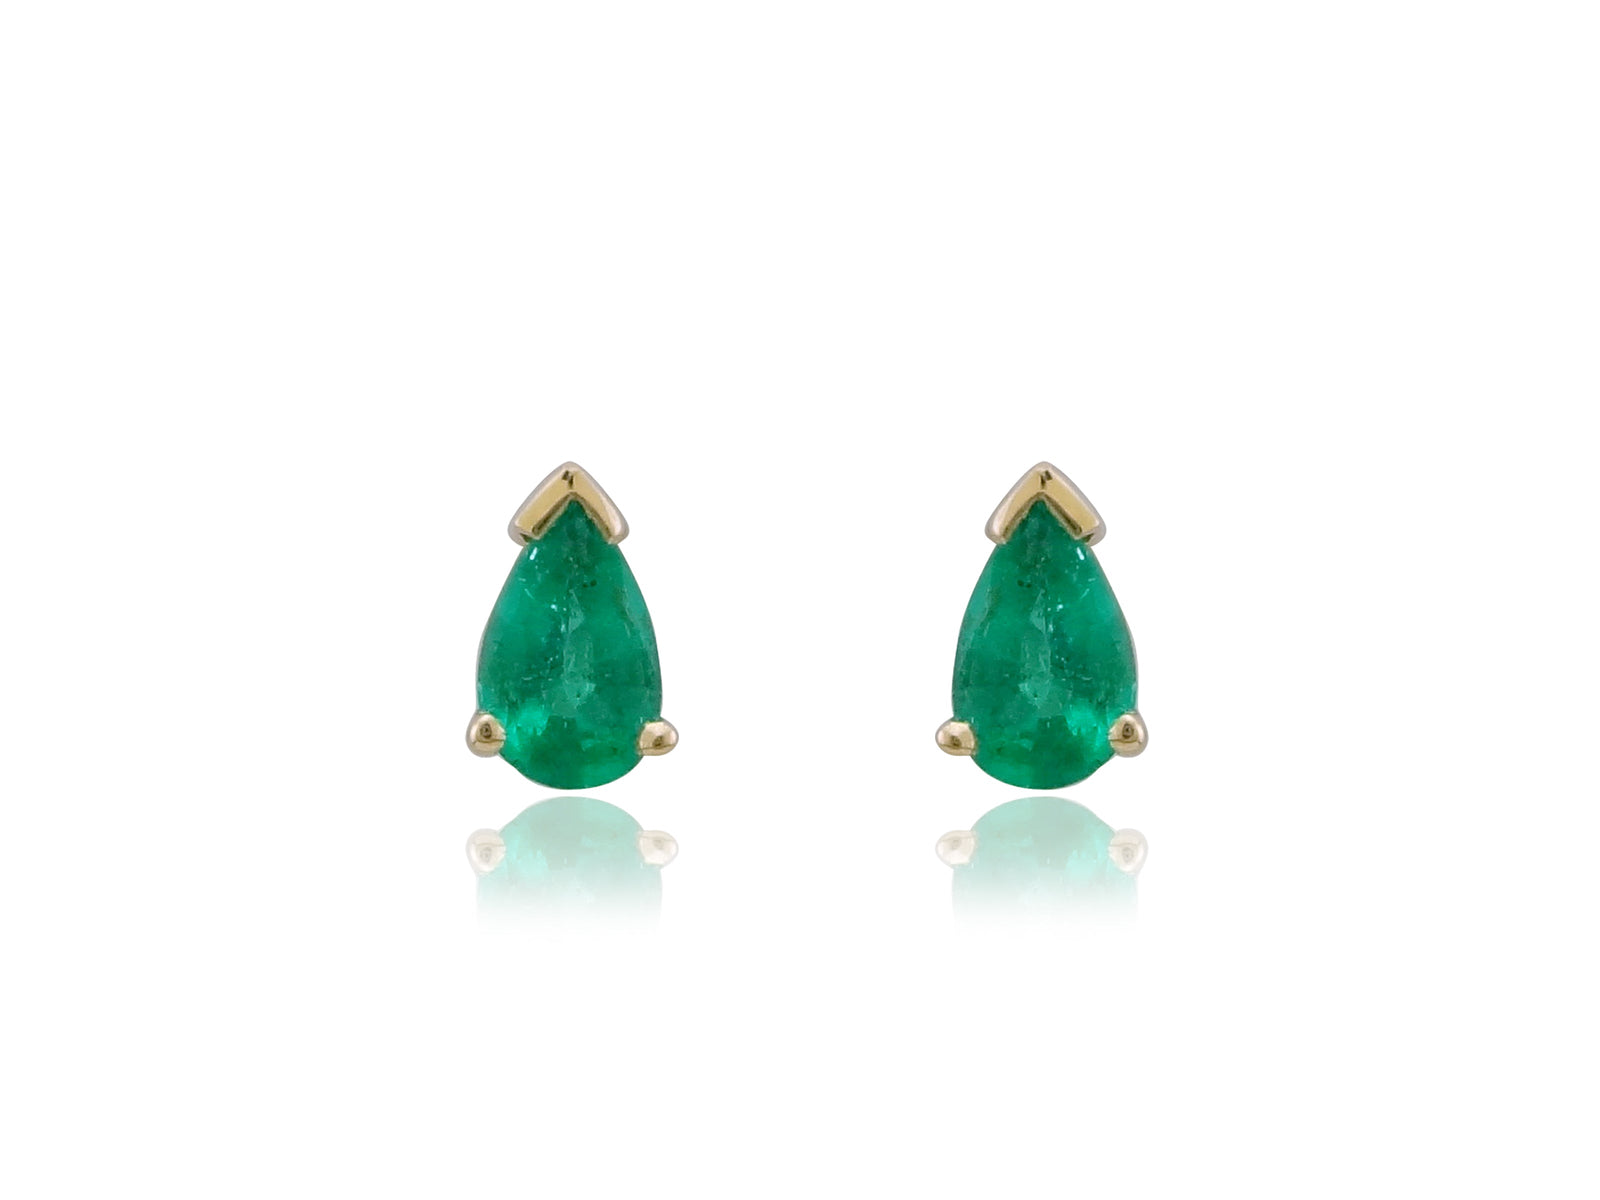 9ct gold 5x3mm pear shape emerald stud earrings